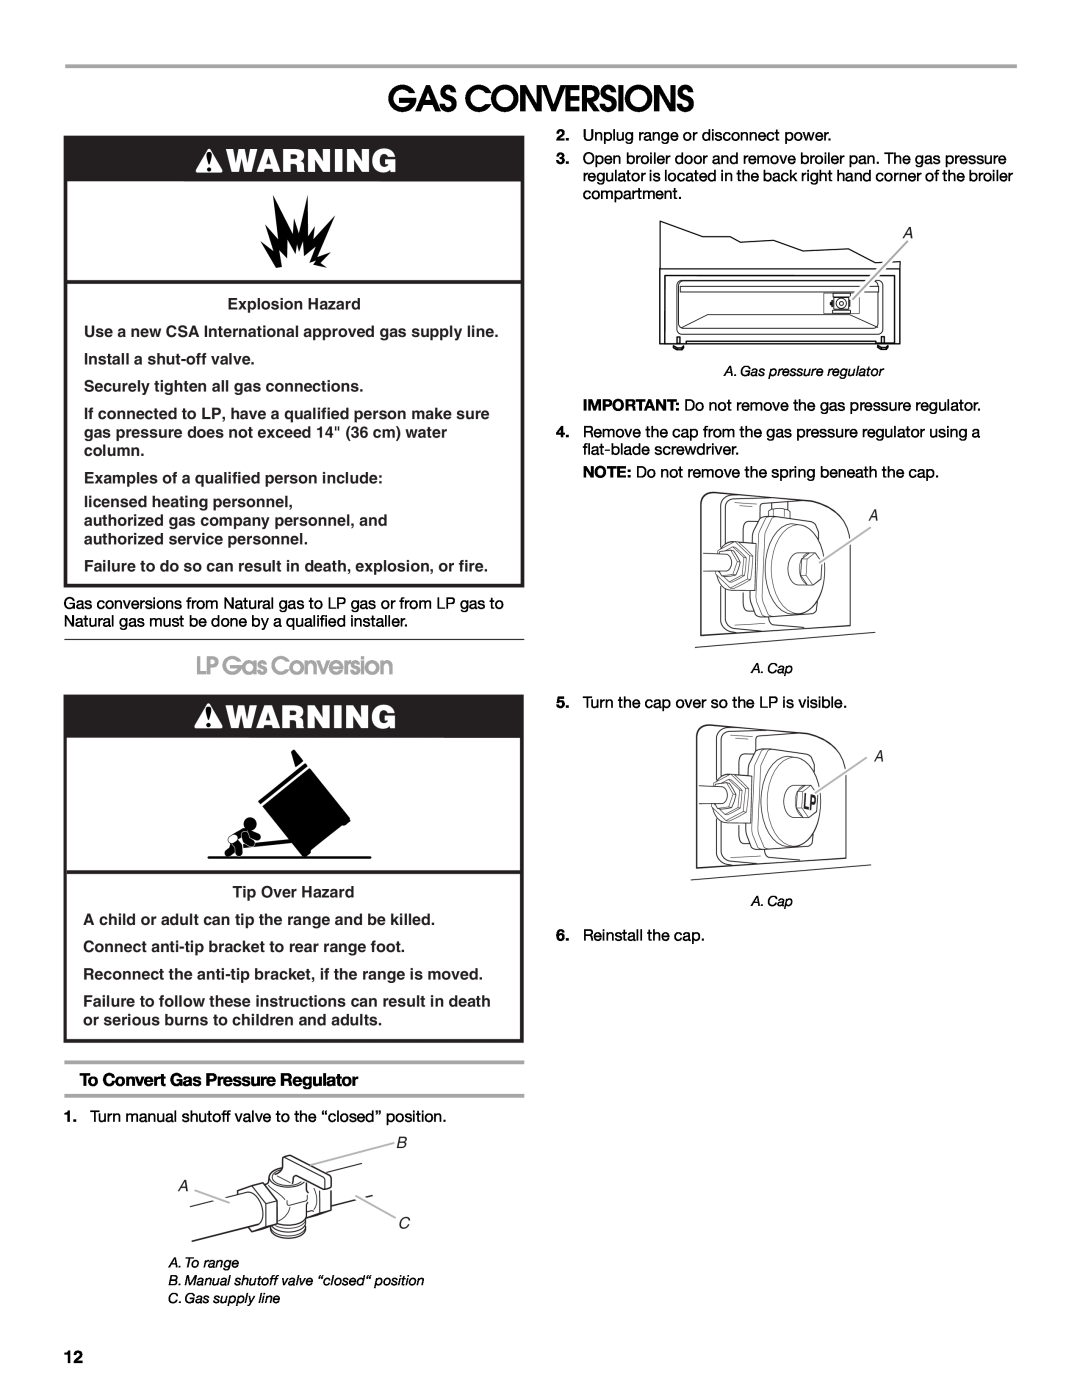 Whirlpool W100329708 installation instructions Gas Conversions, LP Gas Conversion, To Convert Gas Pressure Regulator, B A C 